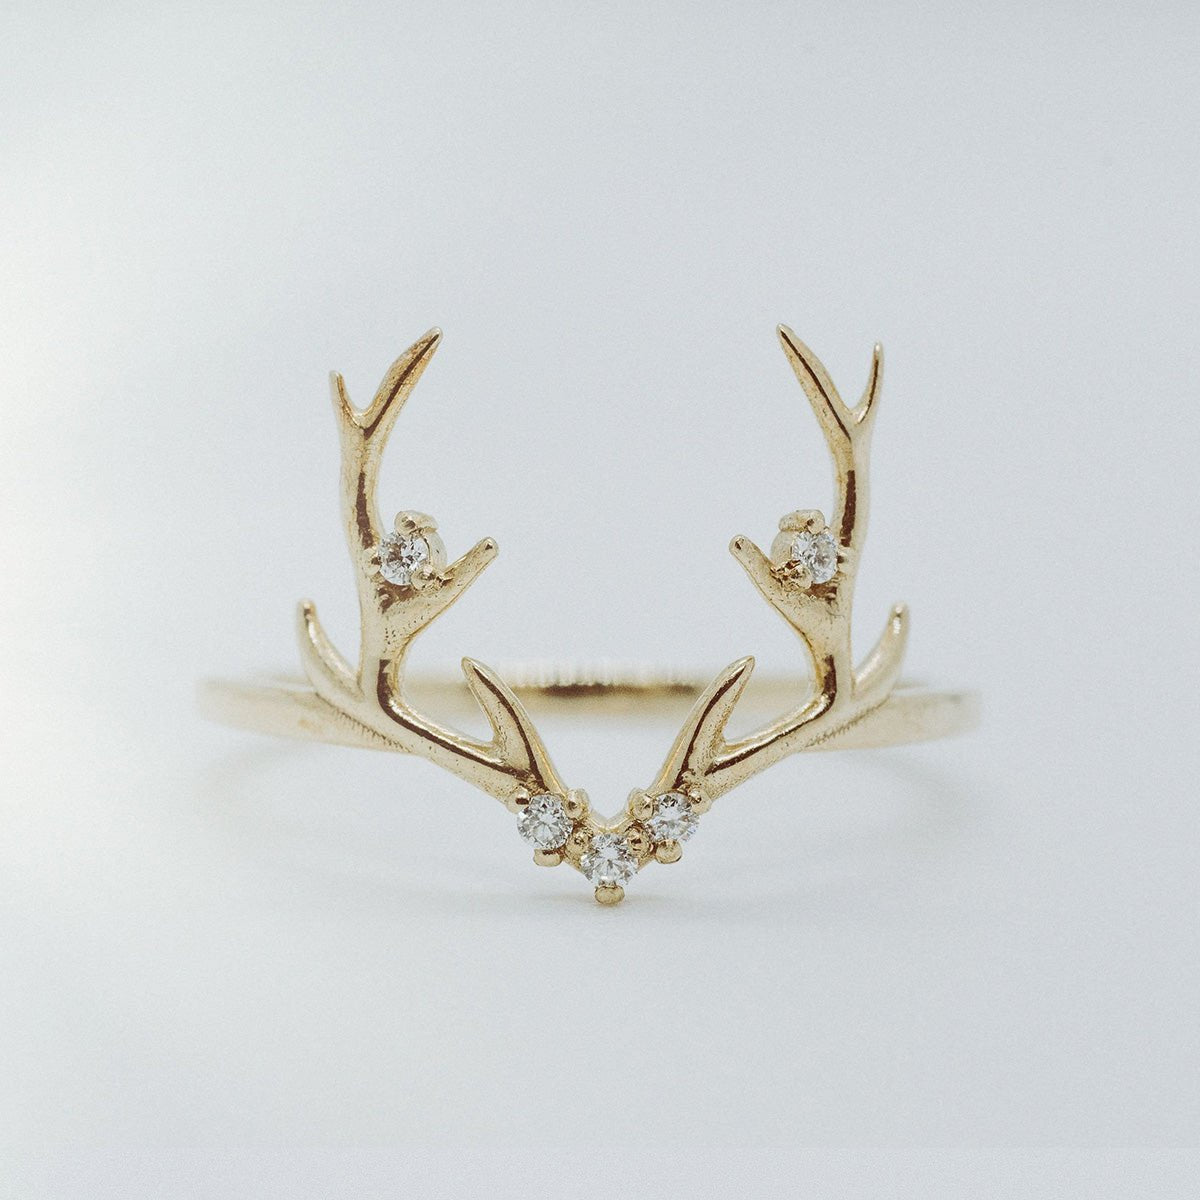 Fine band diamond antler ring - Lelya - bespoke engagement and wedding rings made in Scotland, UK